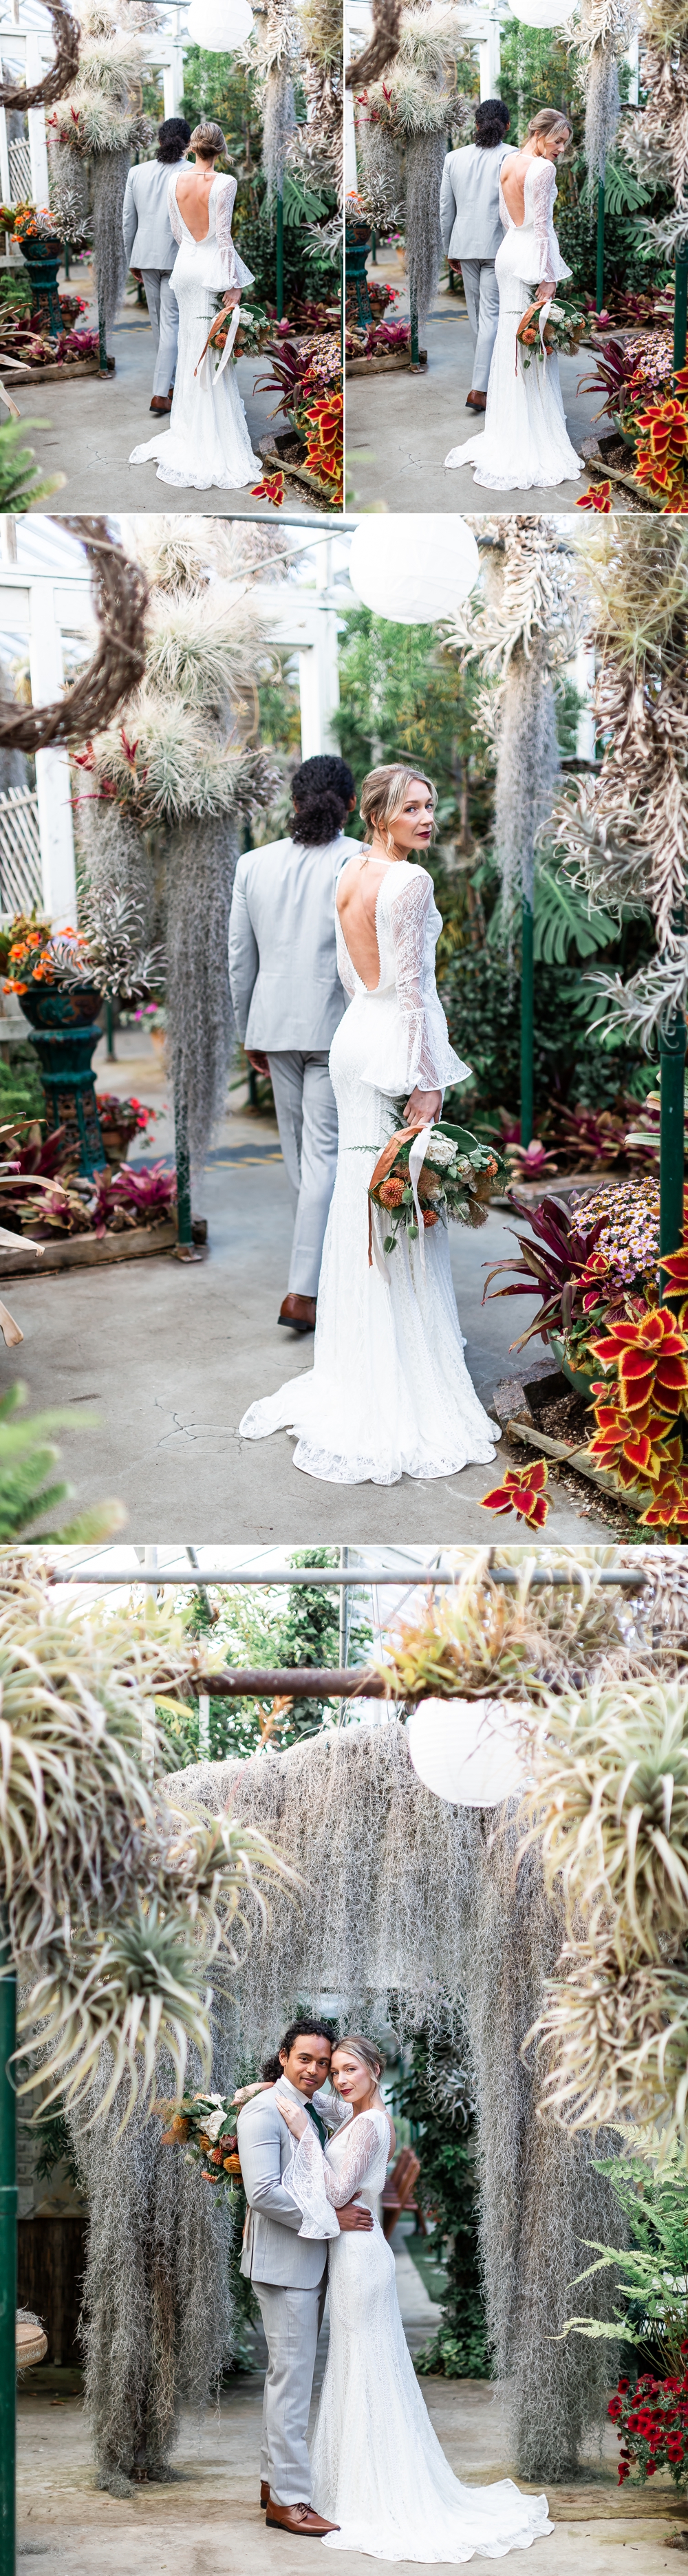 Shelldance Orchid Garden Wedding, Kreate Photography, Boho Weddings